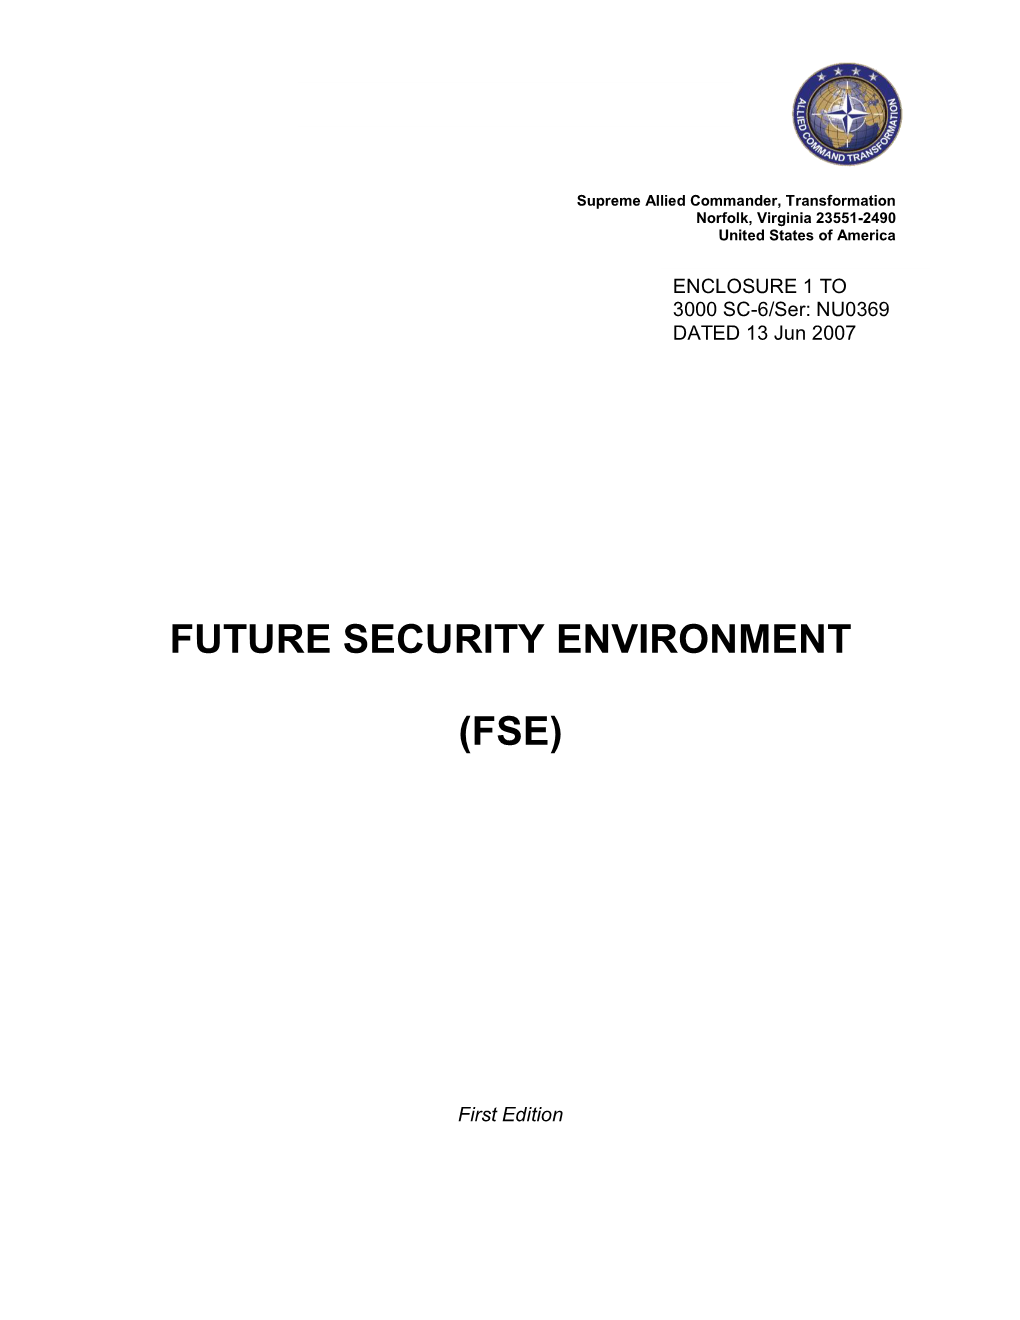 Future Security Environment